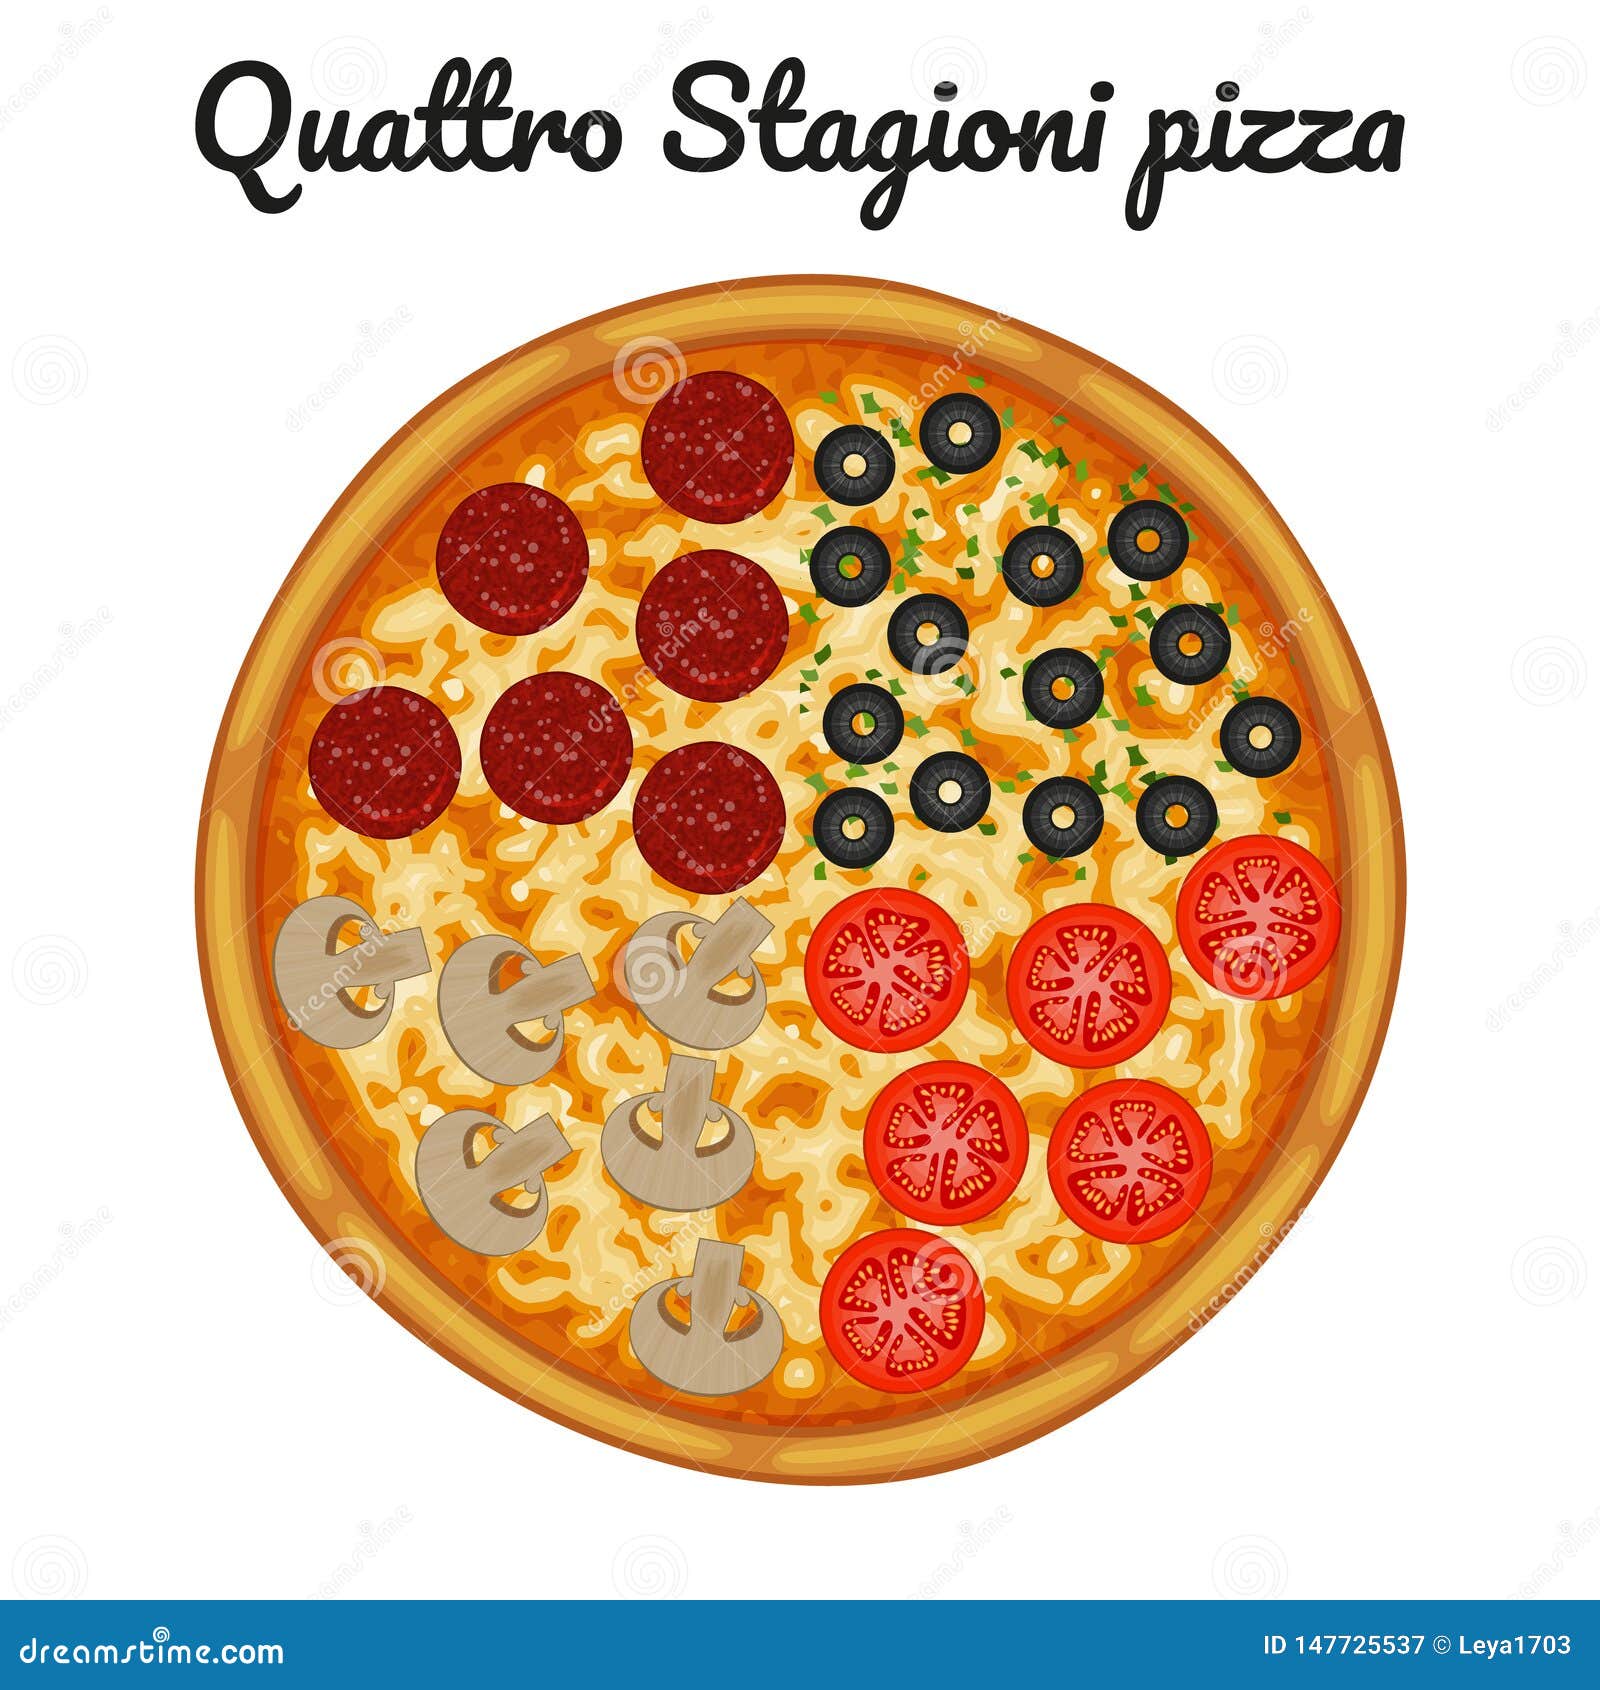 quattro stagioni pizza with pepperoni, olives, mushrooms, tomato.